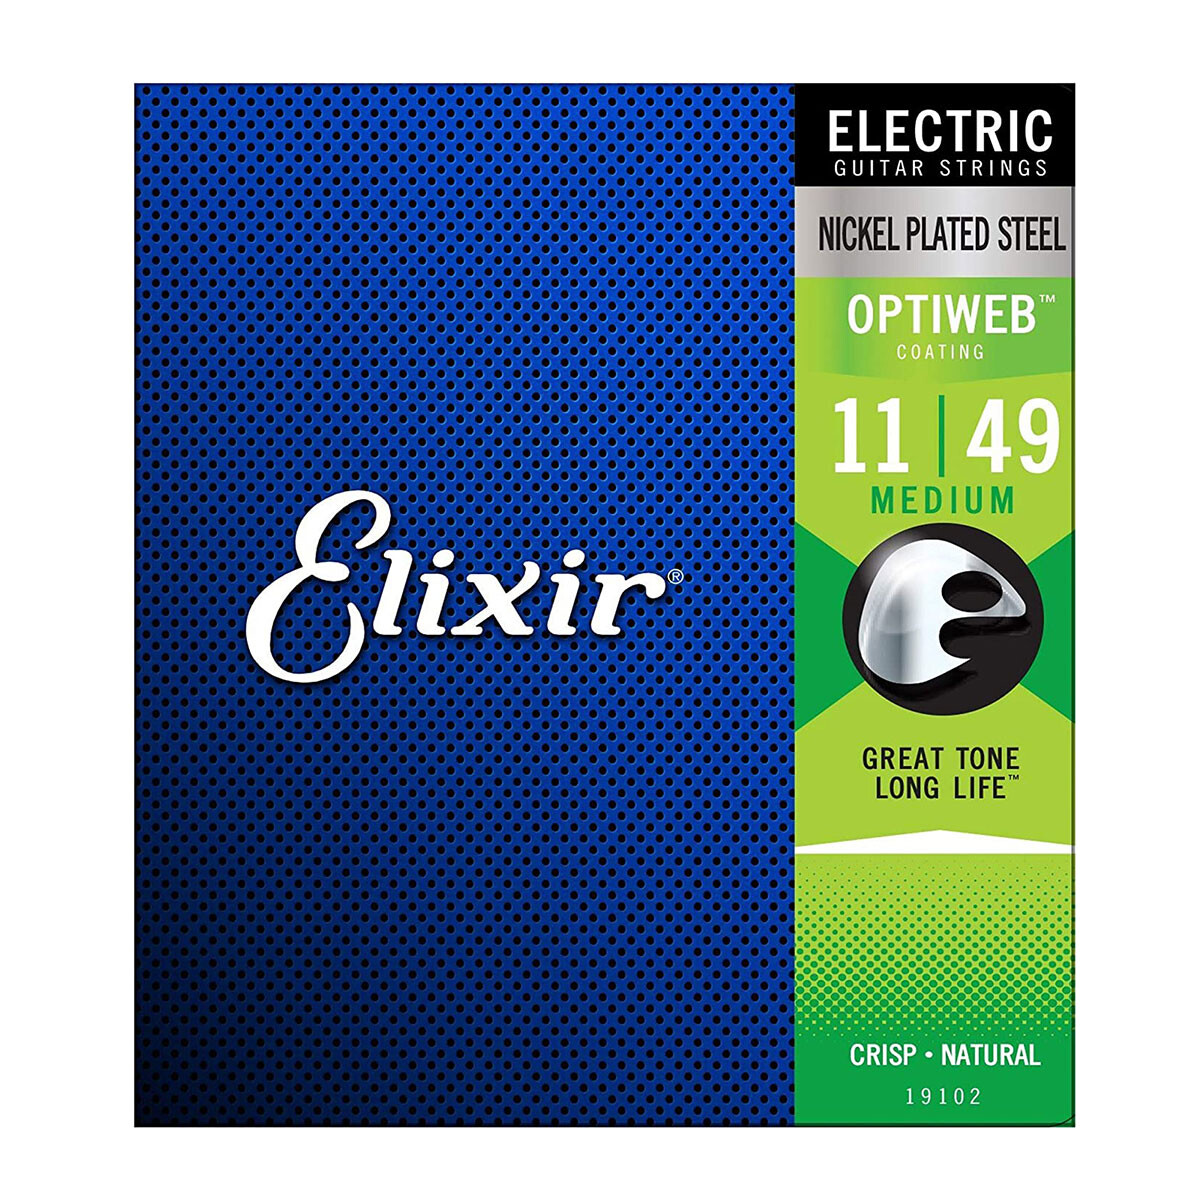 Encordado Electrica Elixir Optiweb 011-049 Medium 